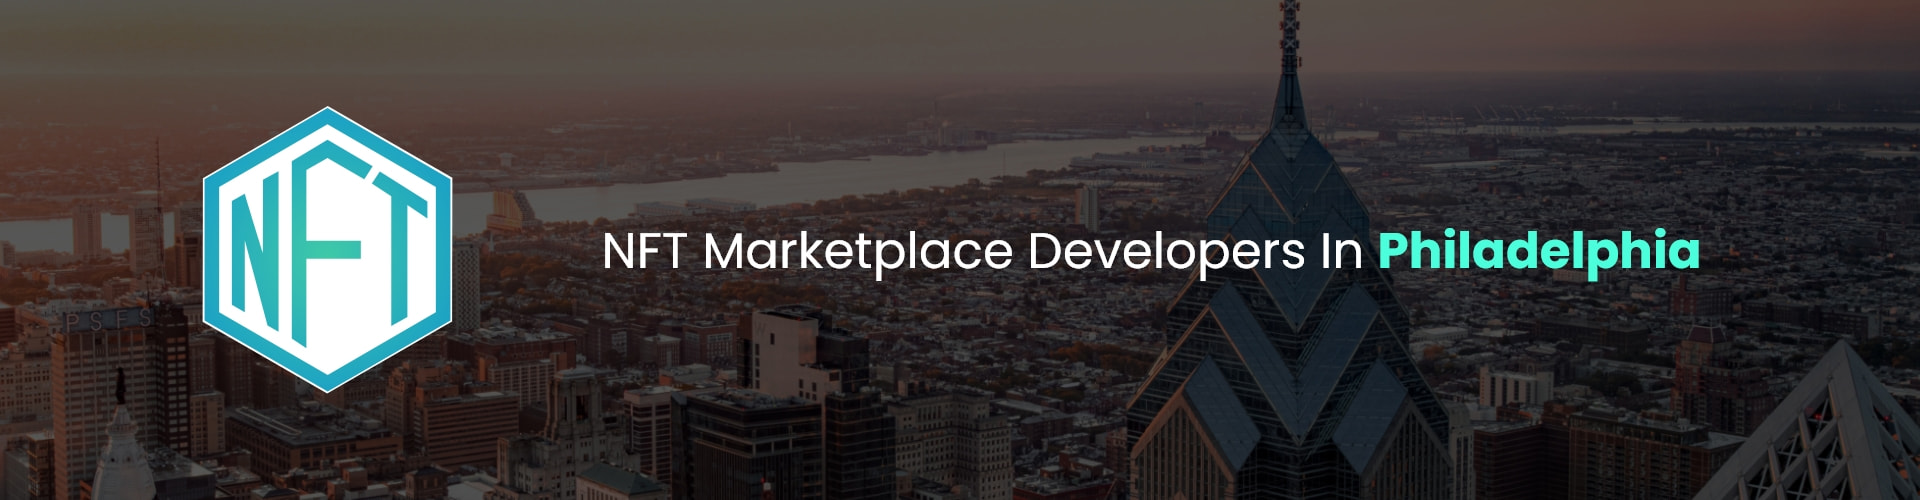 hire nft marketplace developers in philadelphia